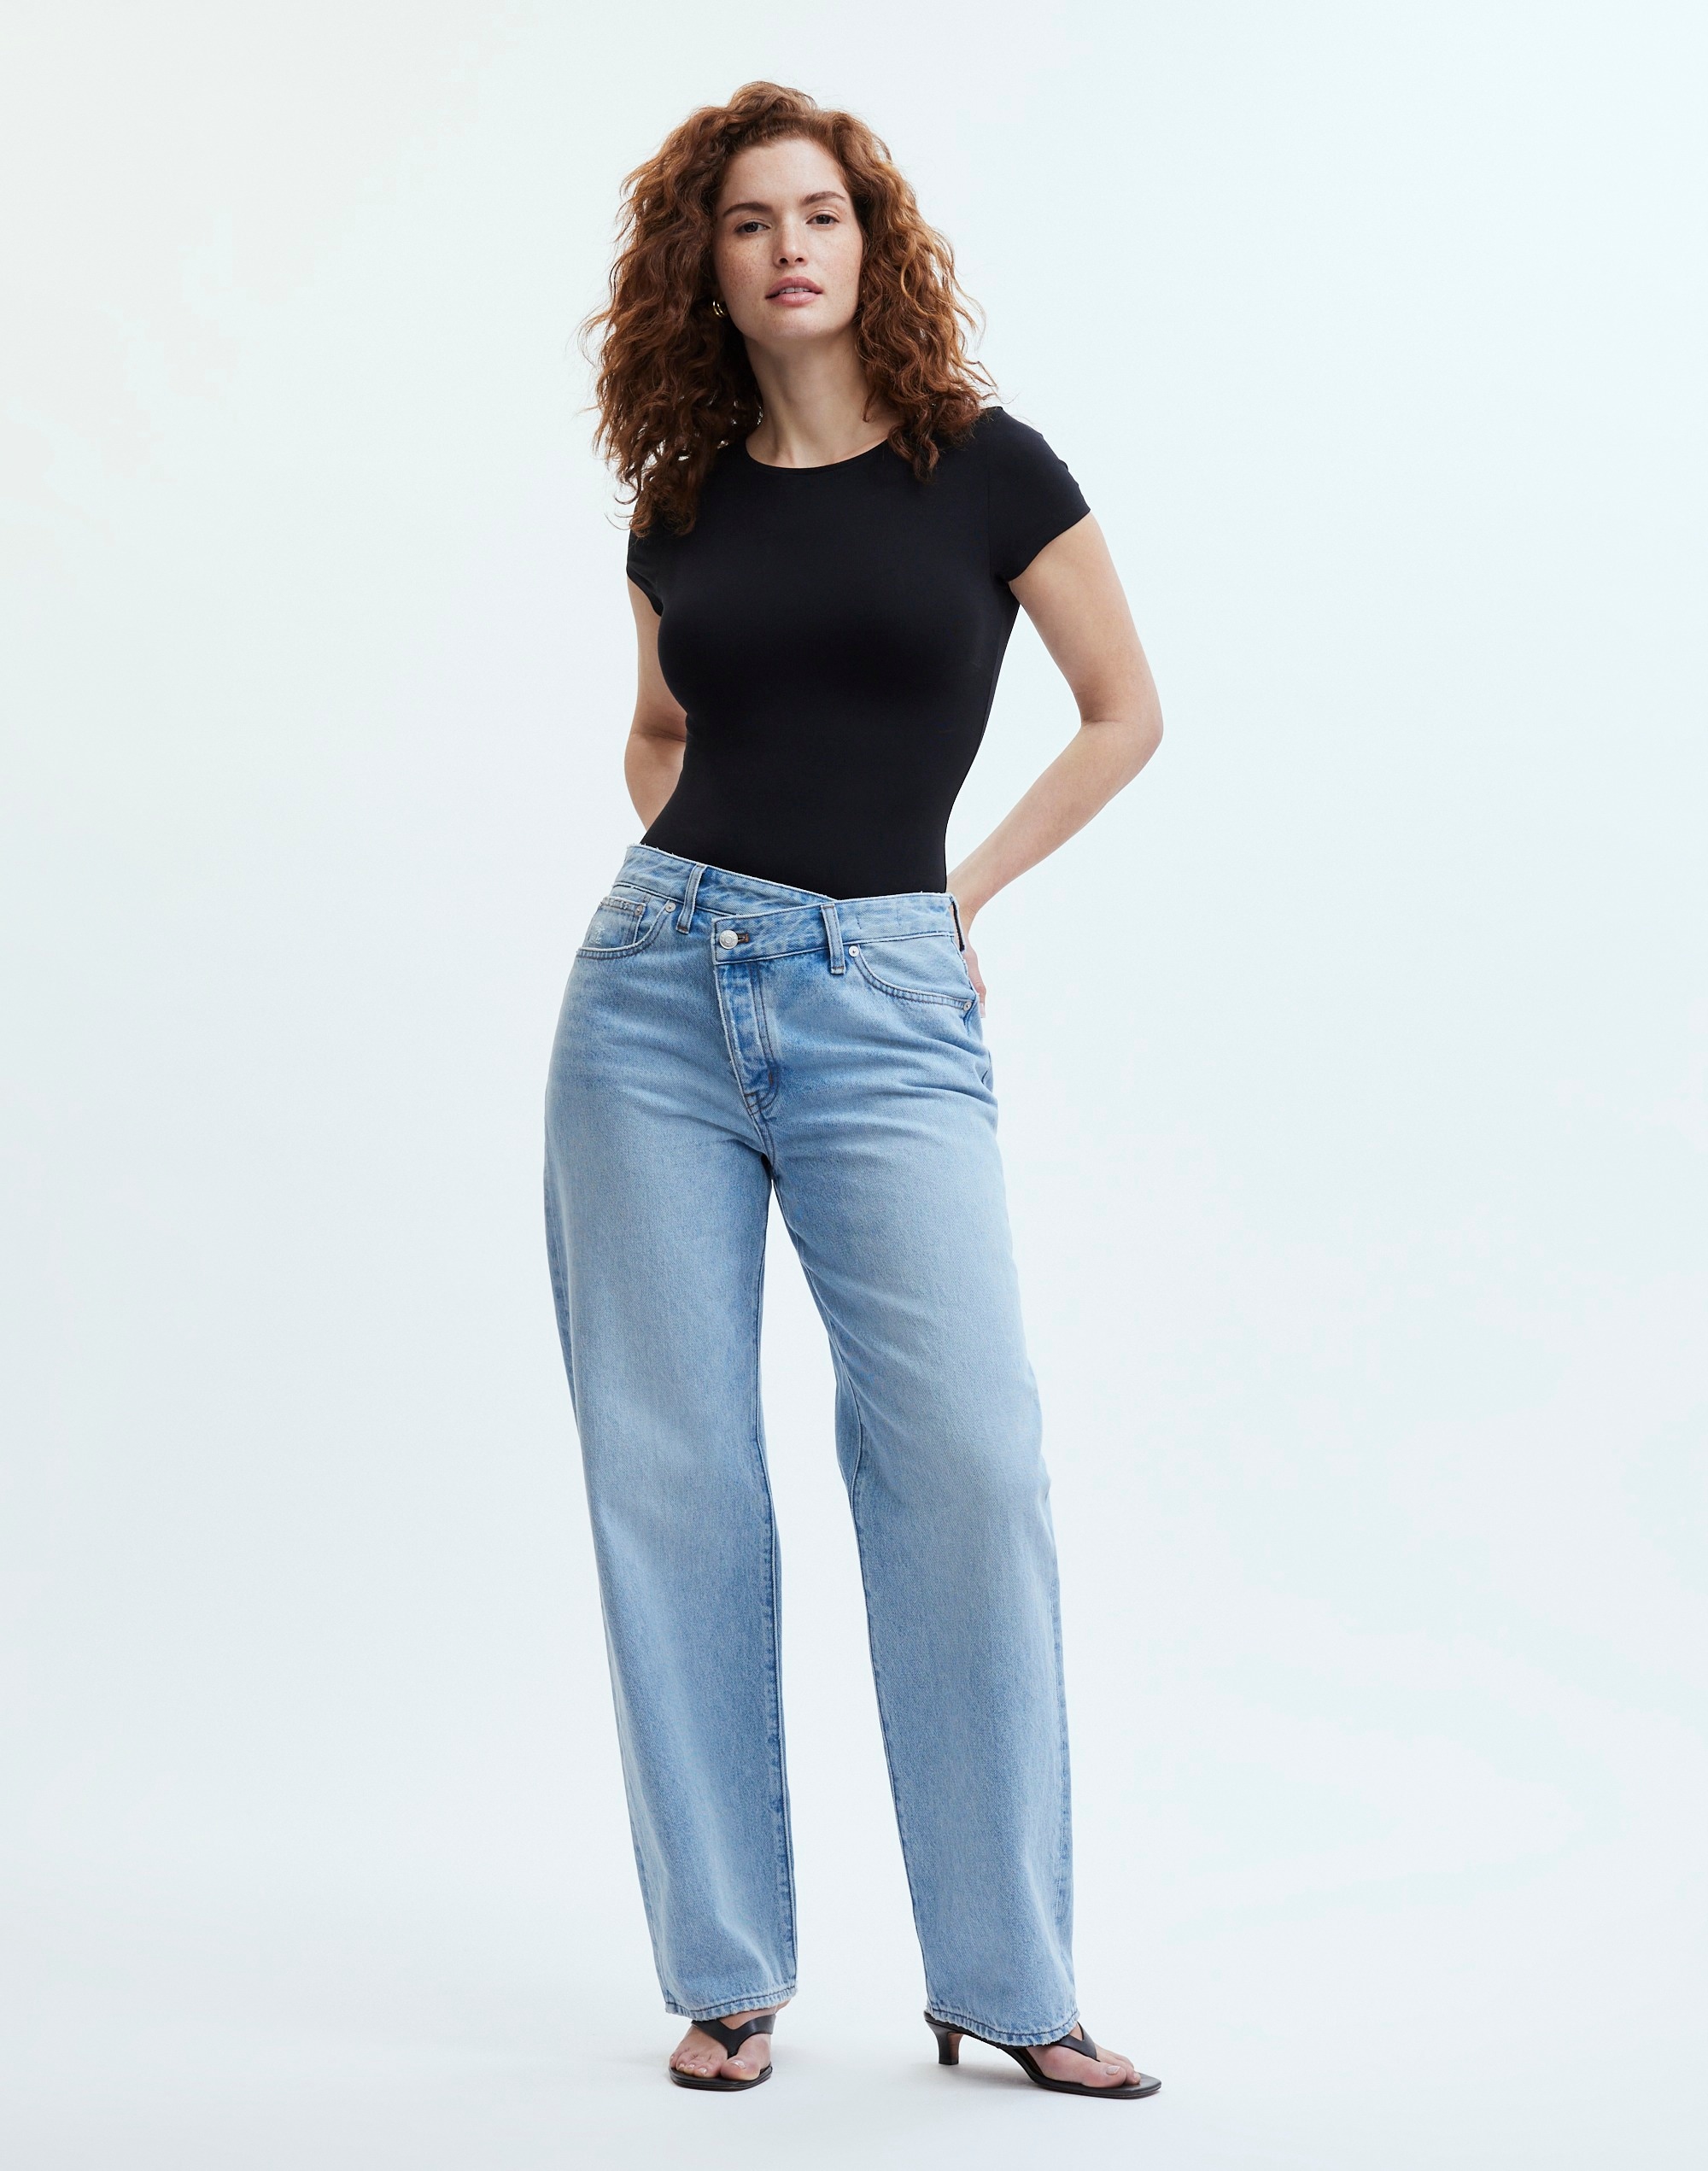 Curvy Low-Slung Straight Jeans Sevilla Wash: Cross-Tab Edition